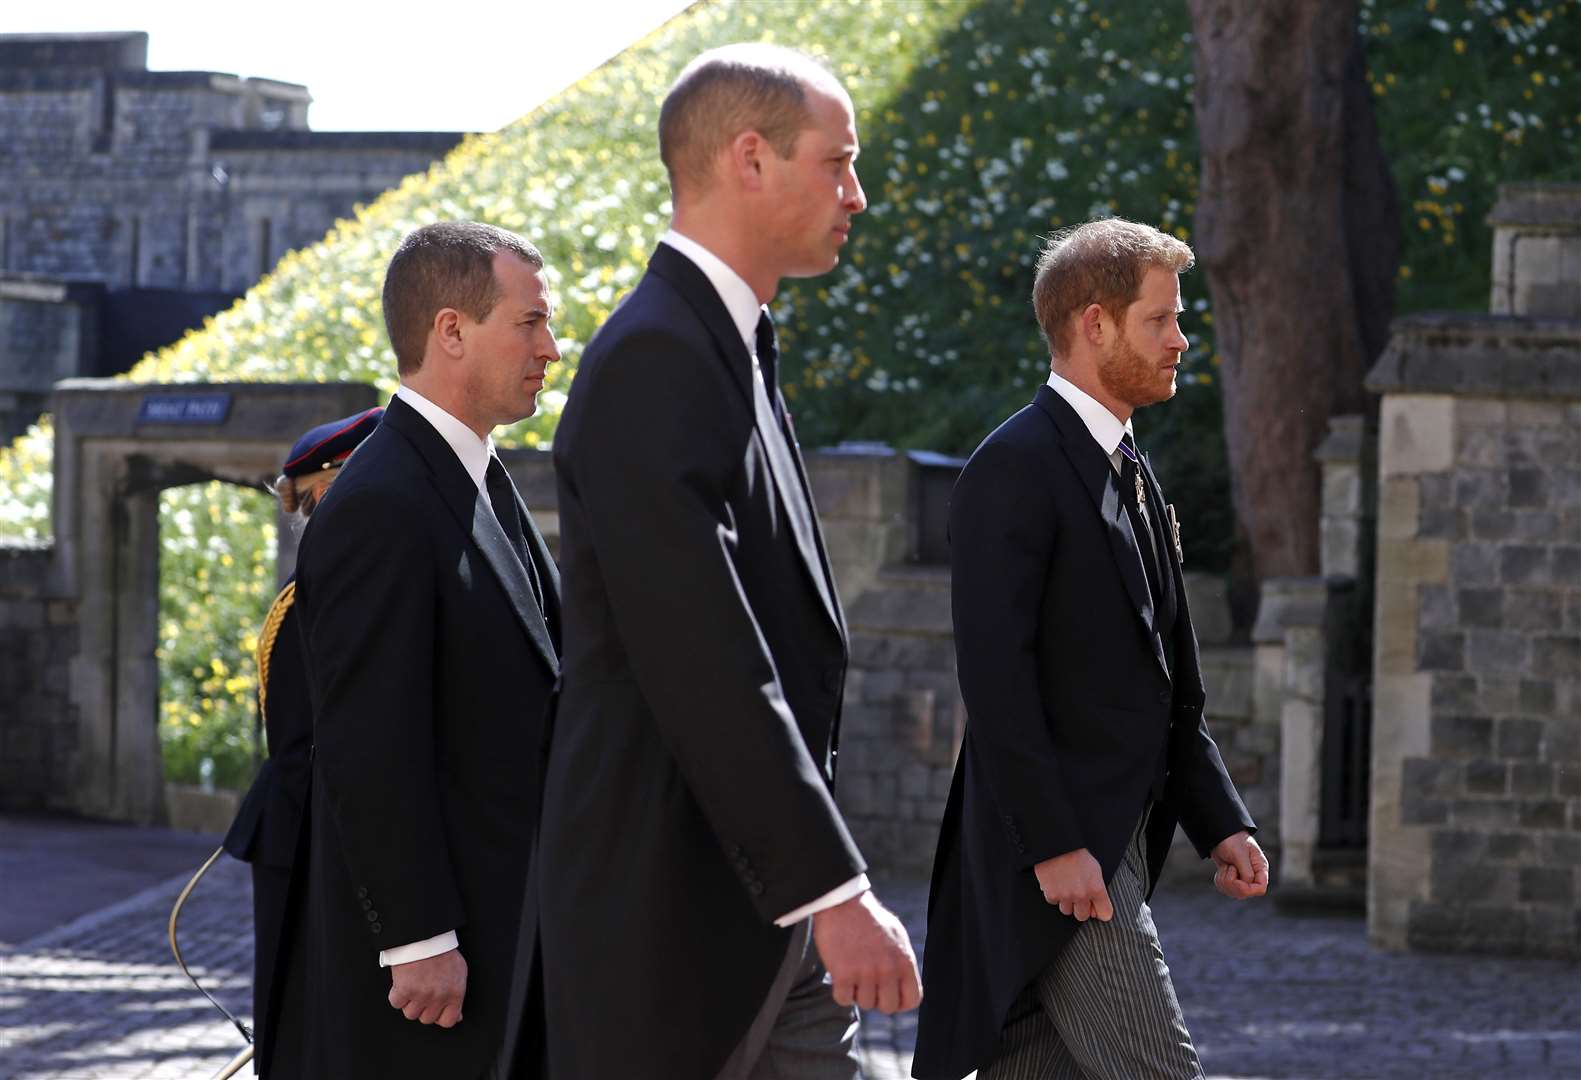 Peter Phillips, the Duke of Cambridge and the Duke of Sussex during the Duke of Edinburgh’s funeral (Alastair Grant/PA)